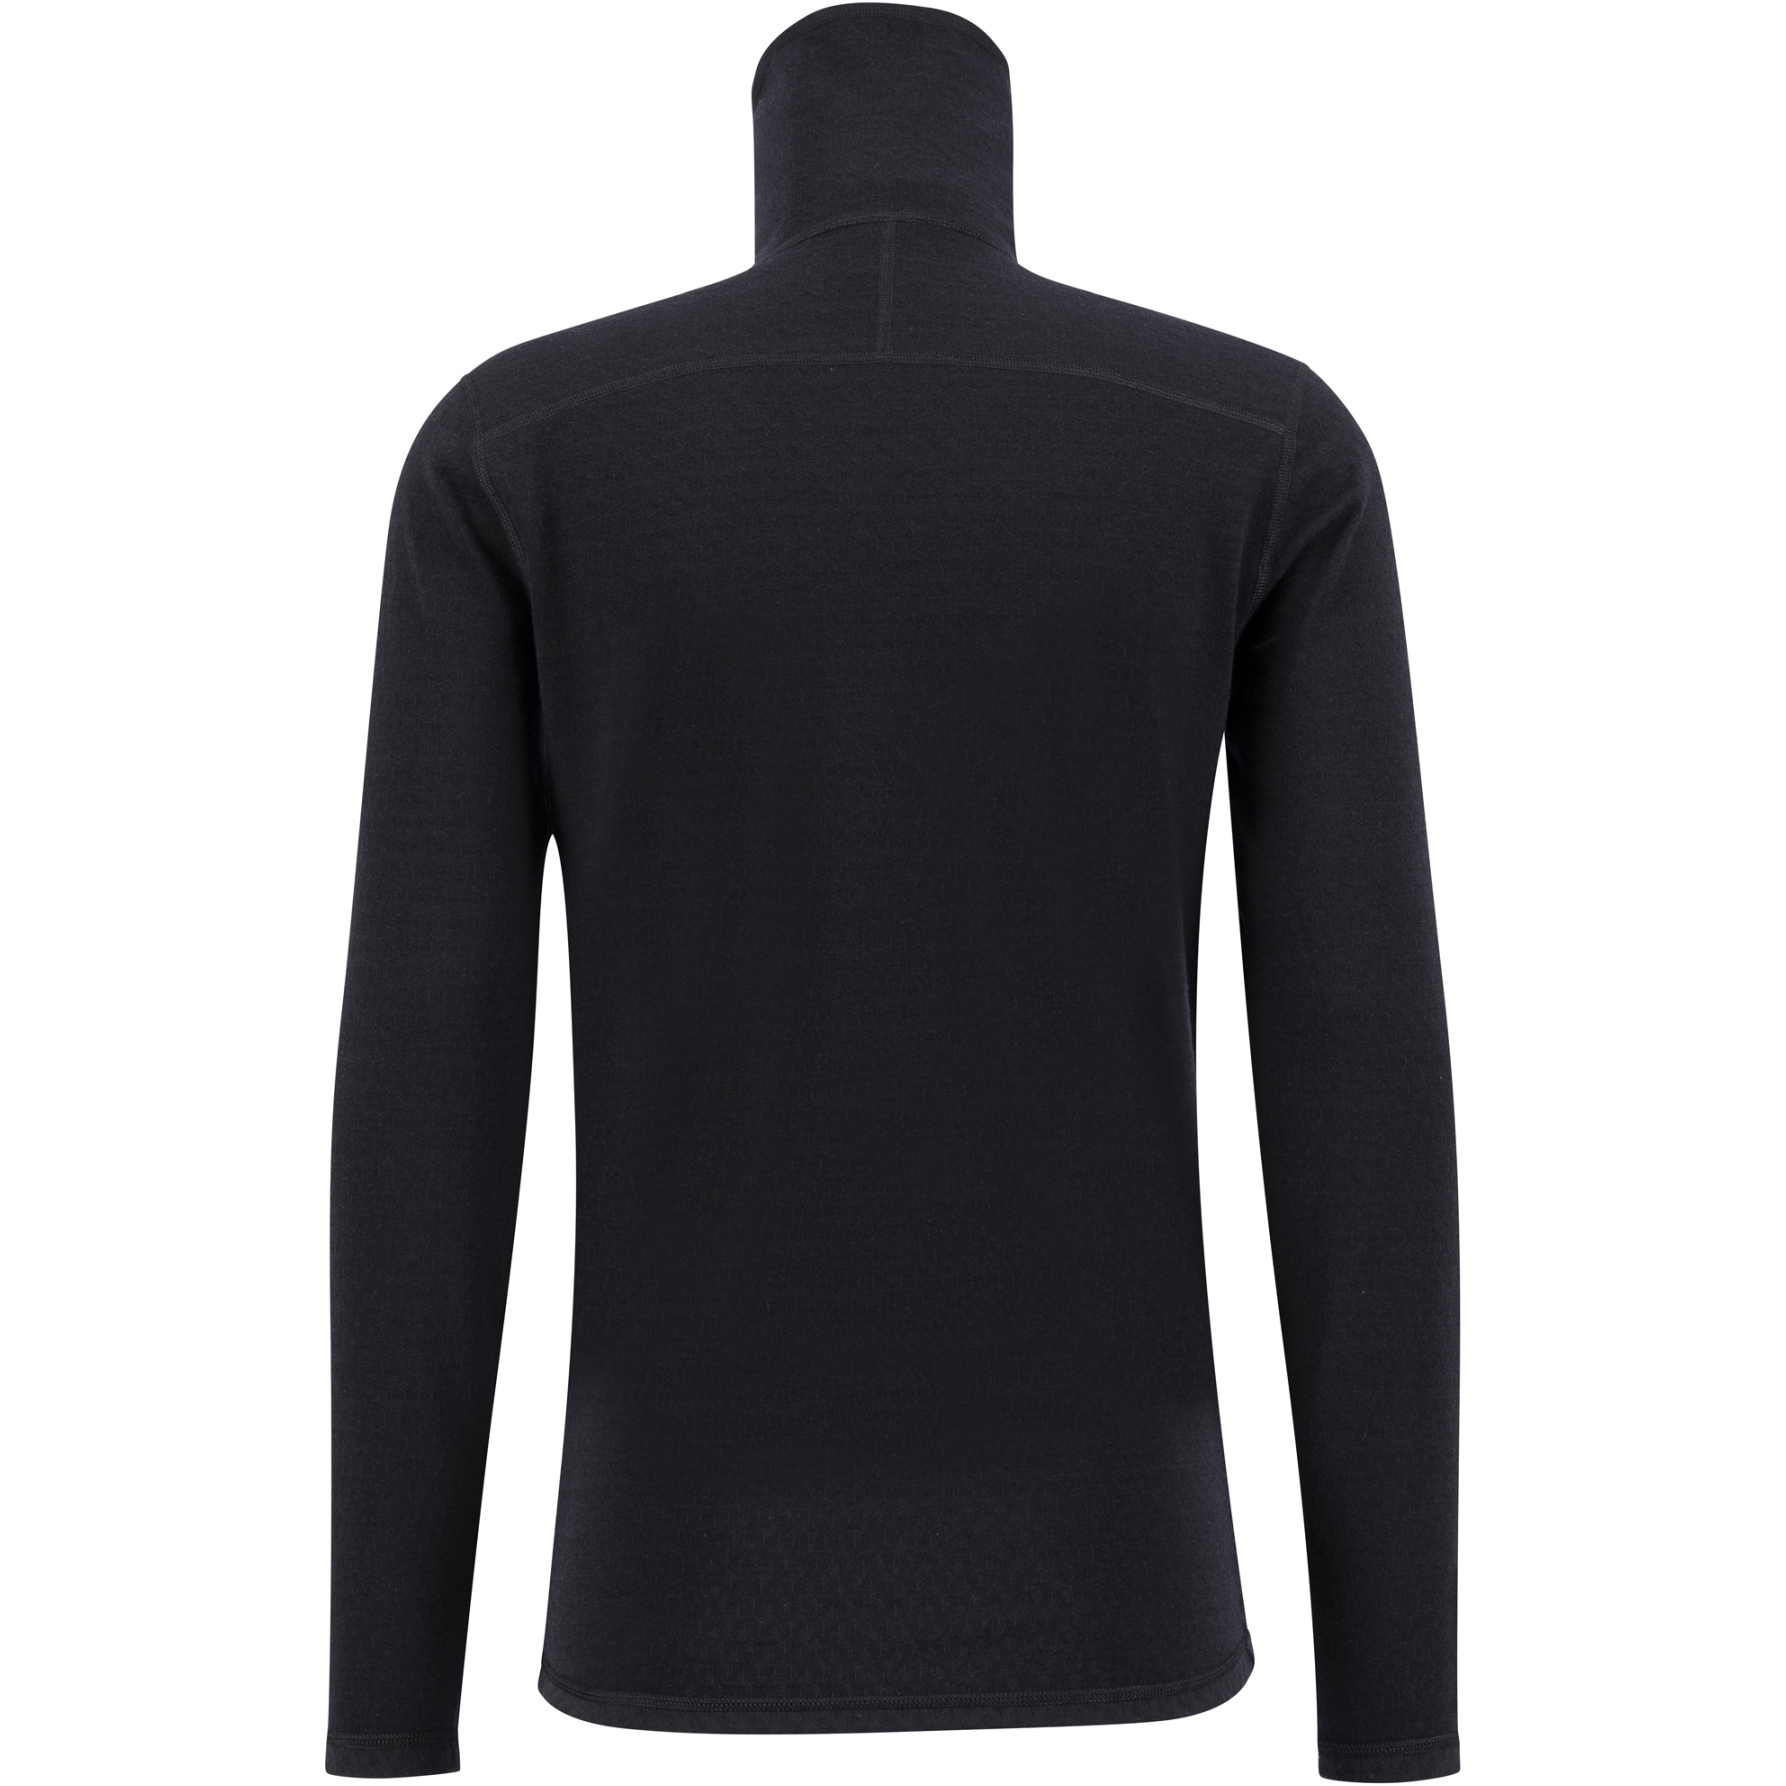 Ulvang Camiseta Cuello Alto Hombre - Comfort 200 - Negro/Negro